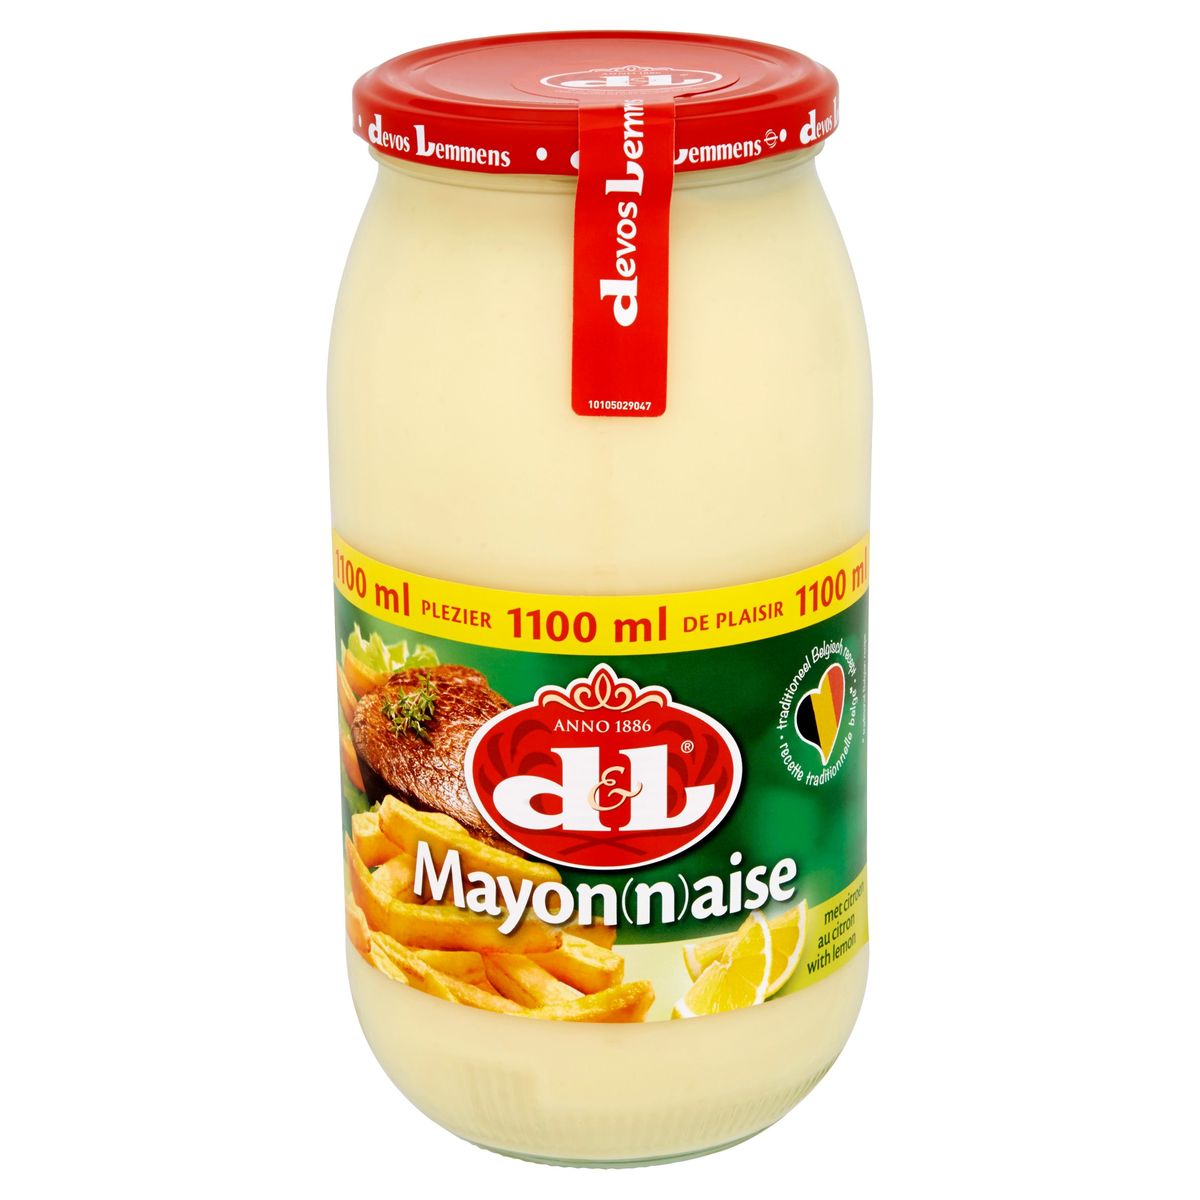 Devos Lemmens Mayonaise met Citroen 1100 ml